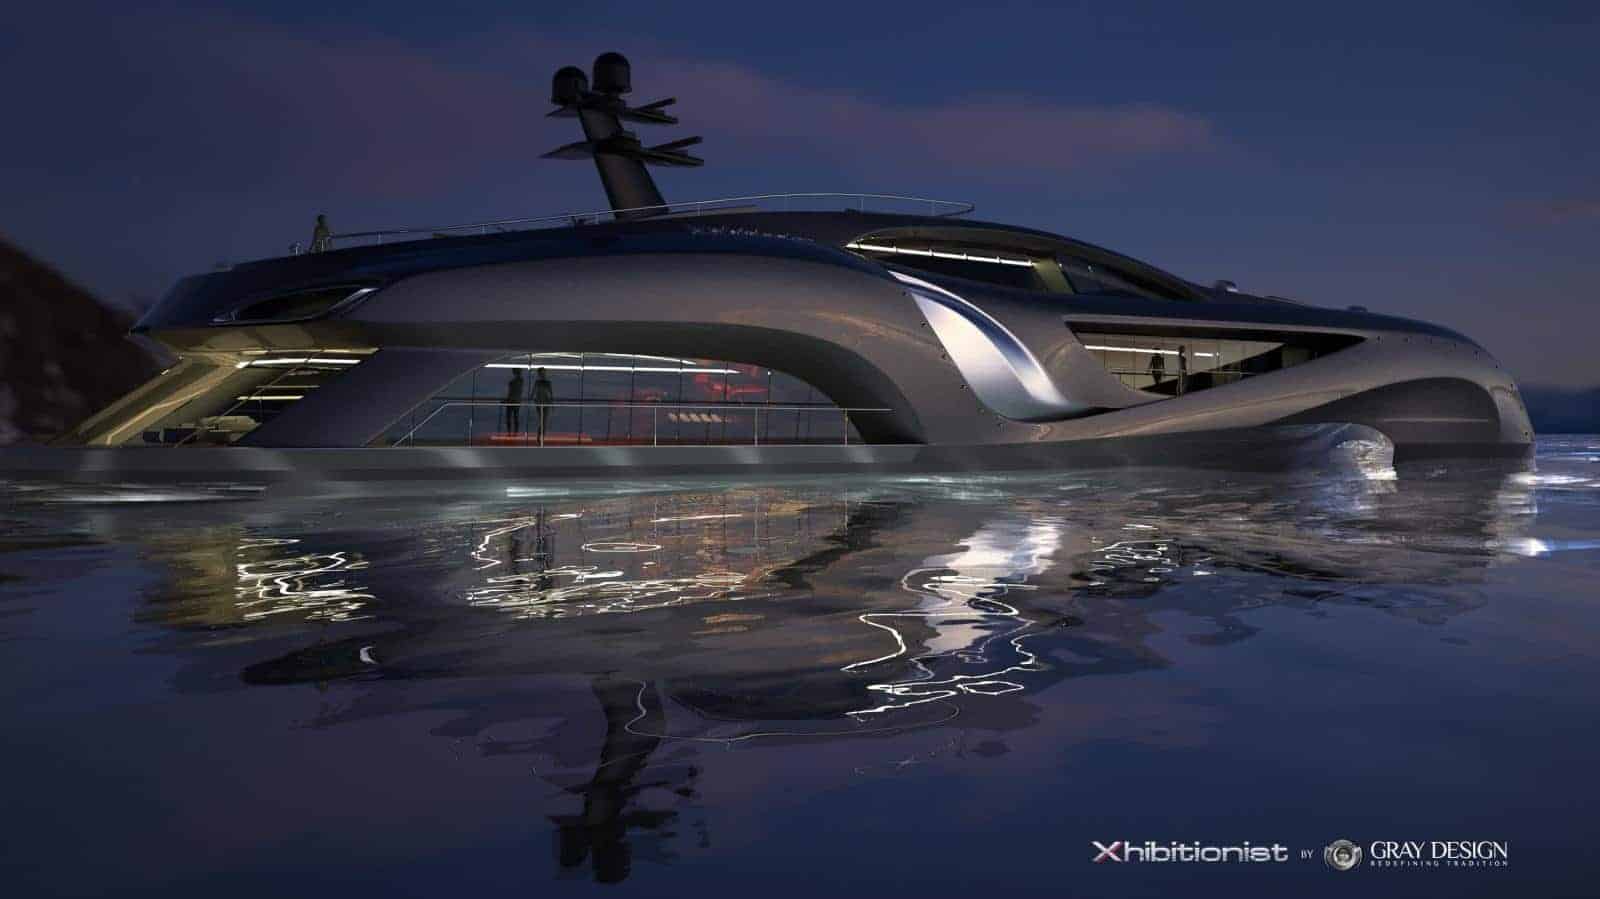 Gray Design’s Xhibitionist yacht and Xhibit G car 8